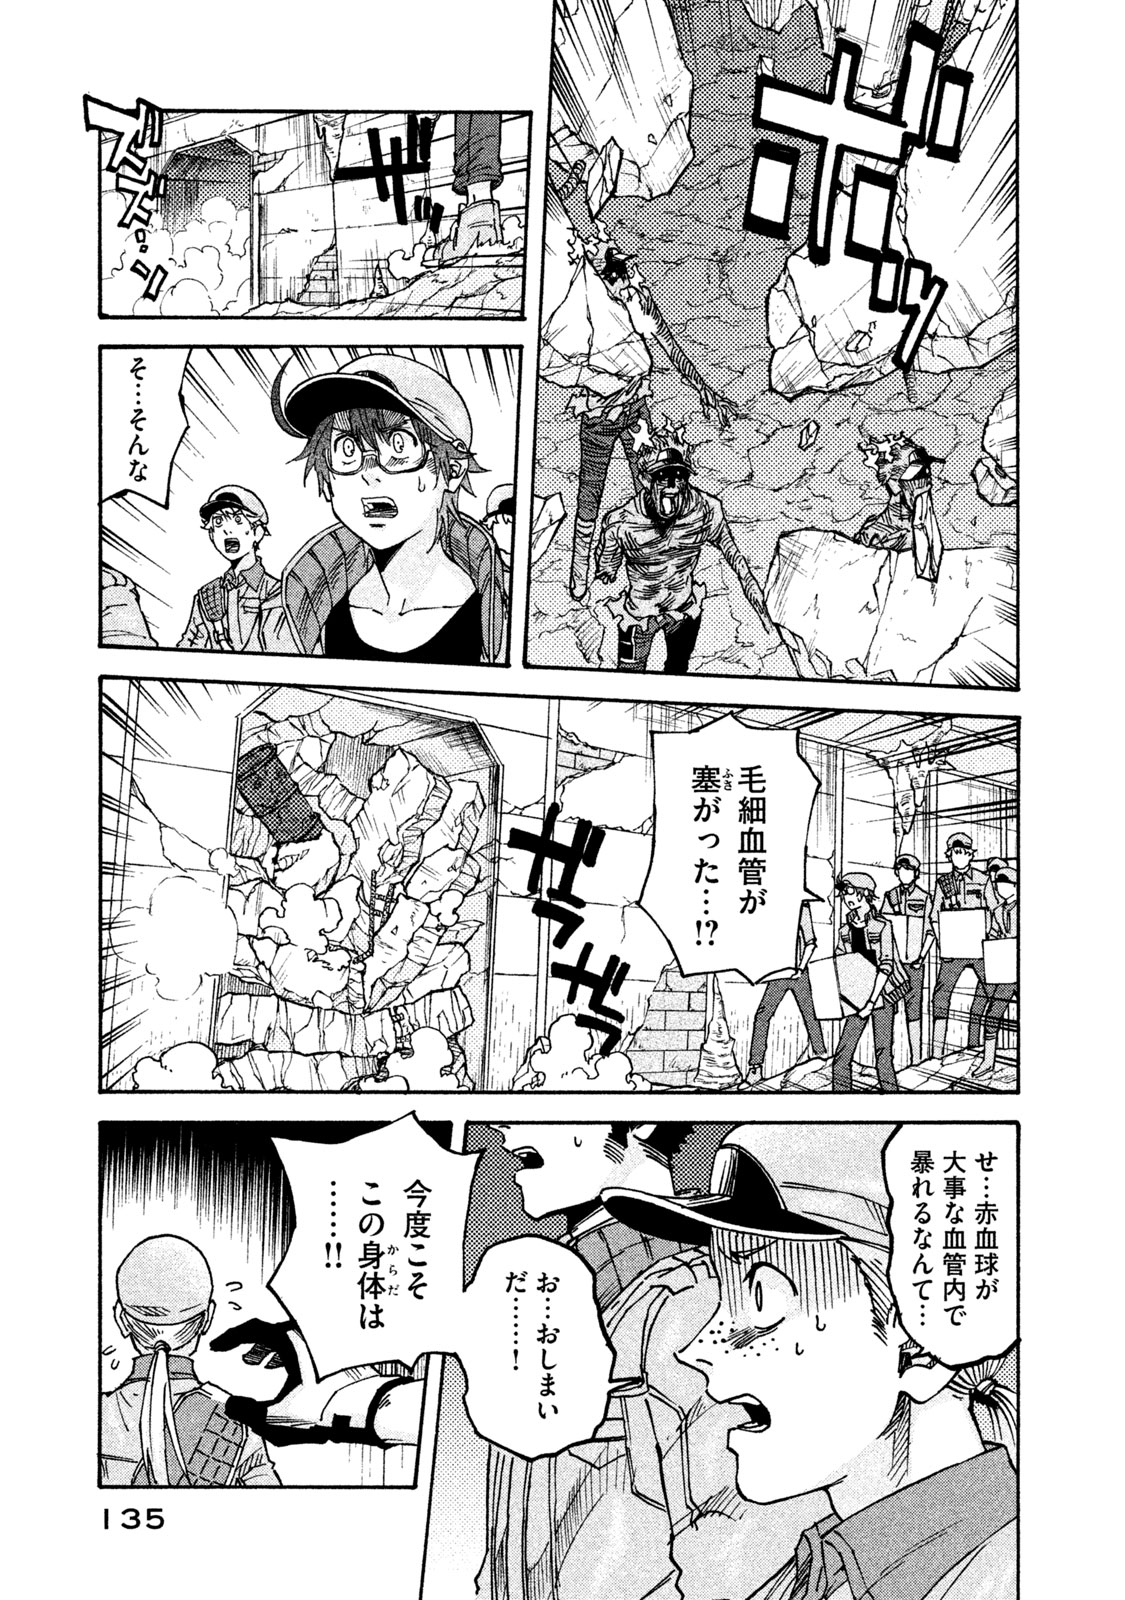 Hataraku Saibou BLACK - Chapter 24 - Page 9